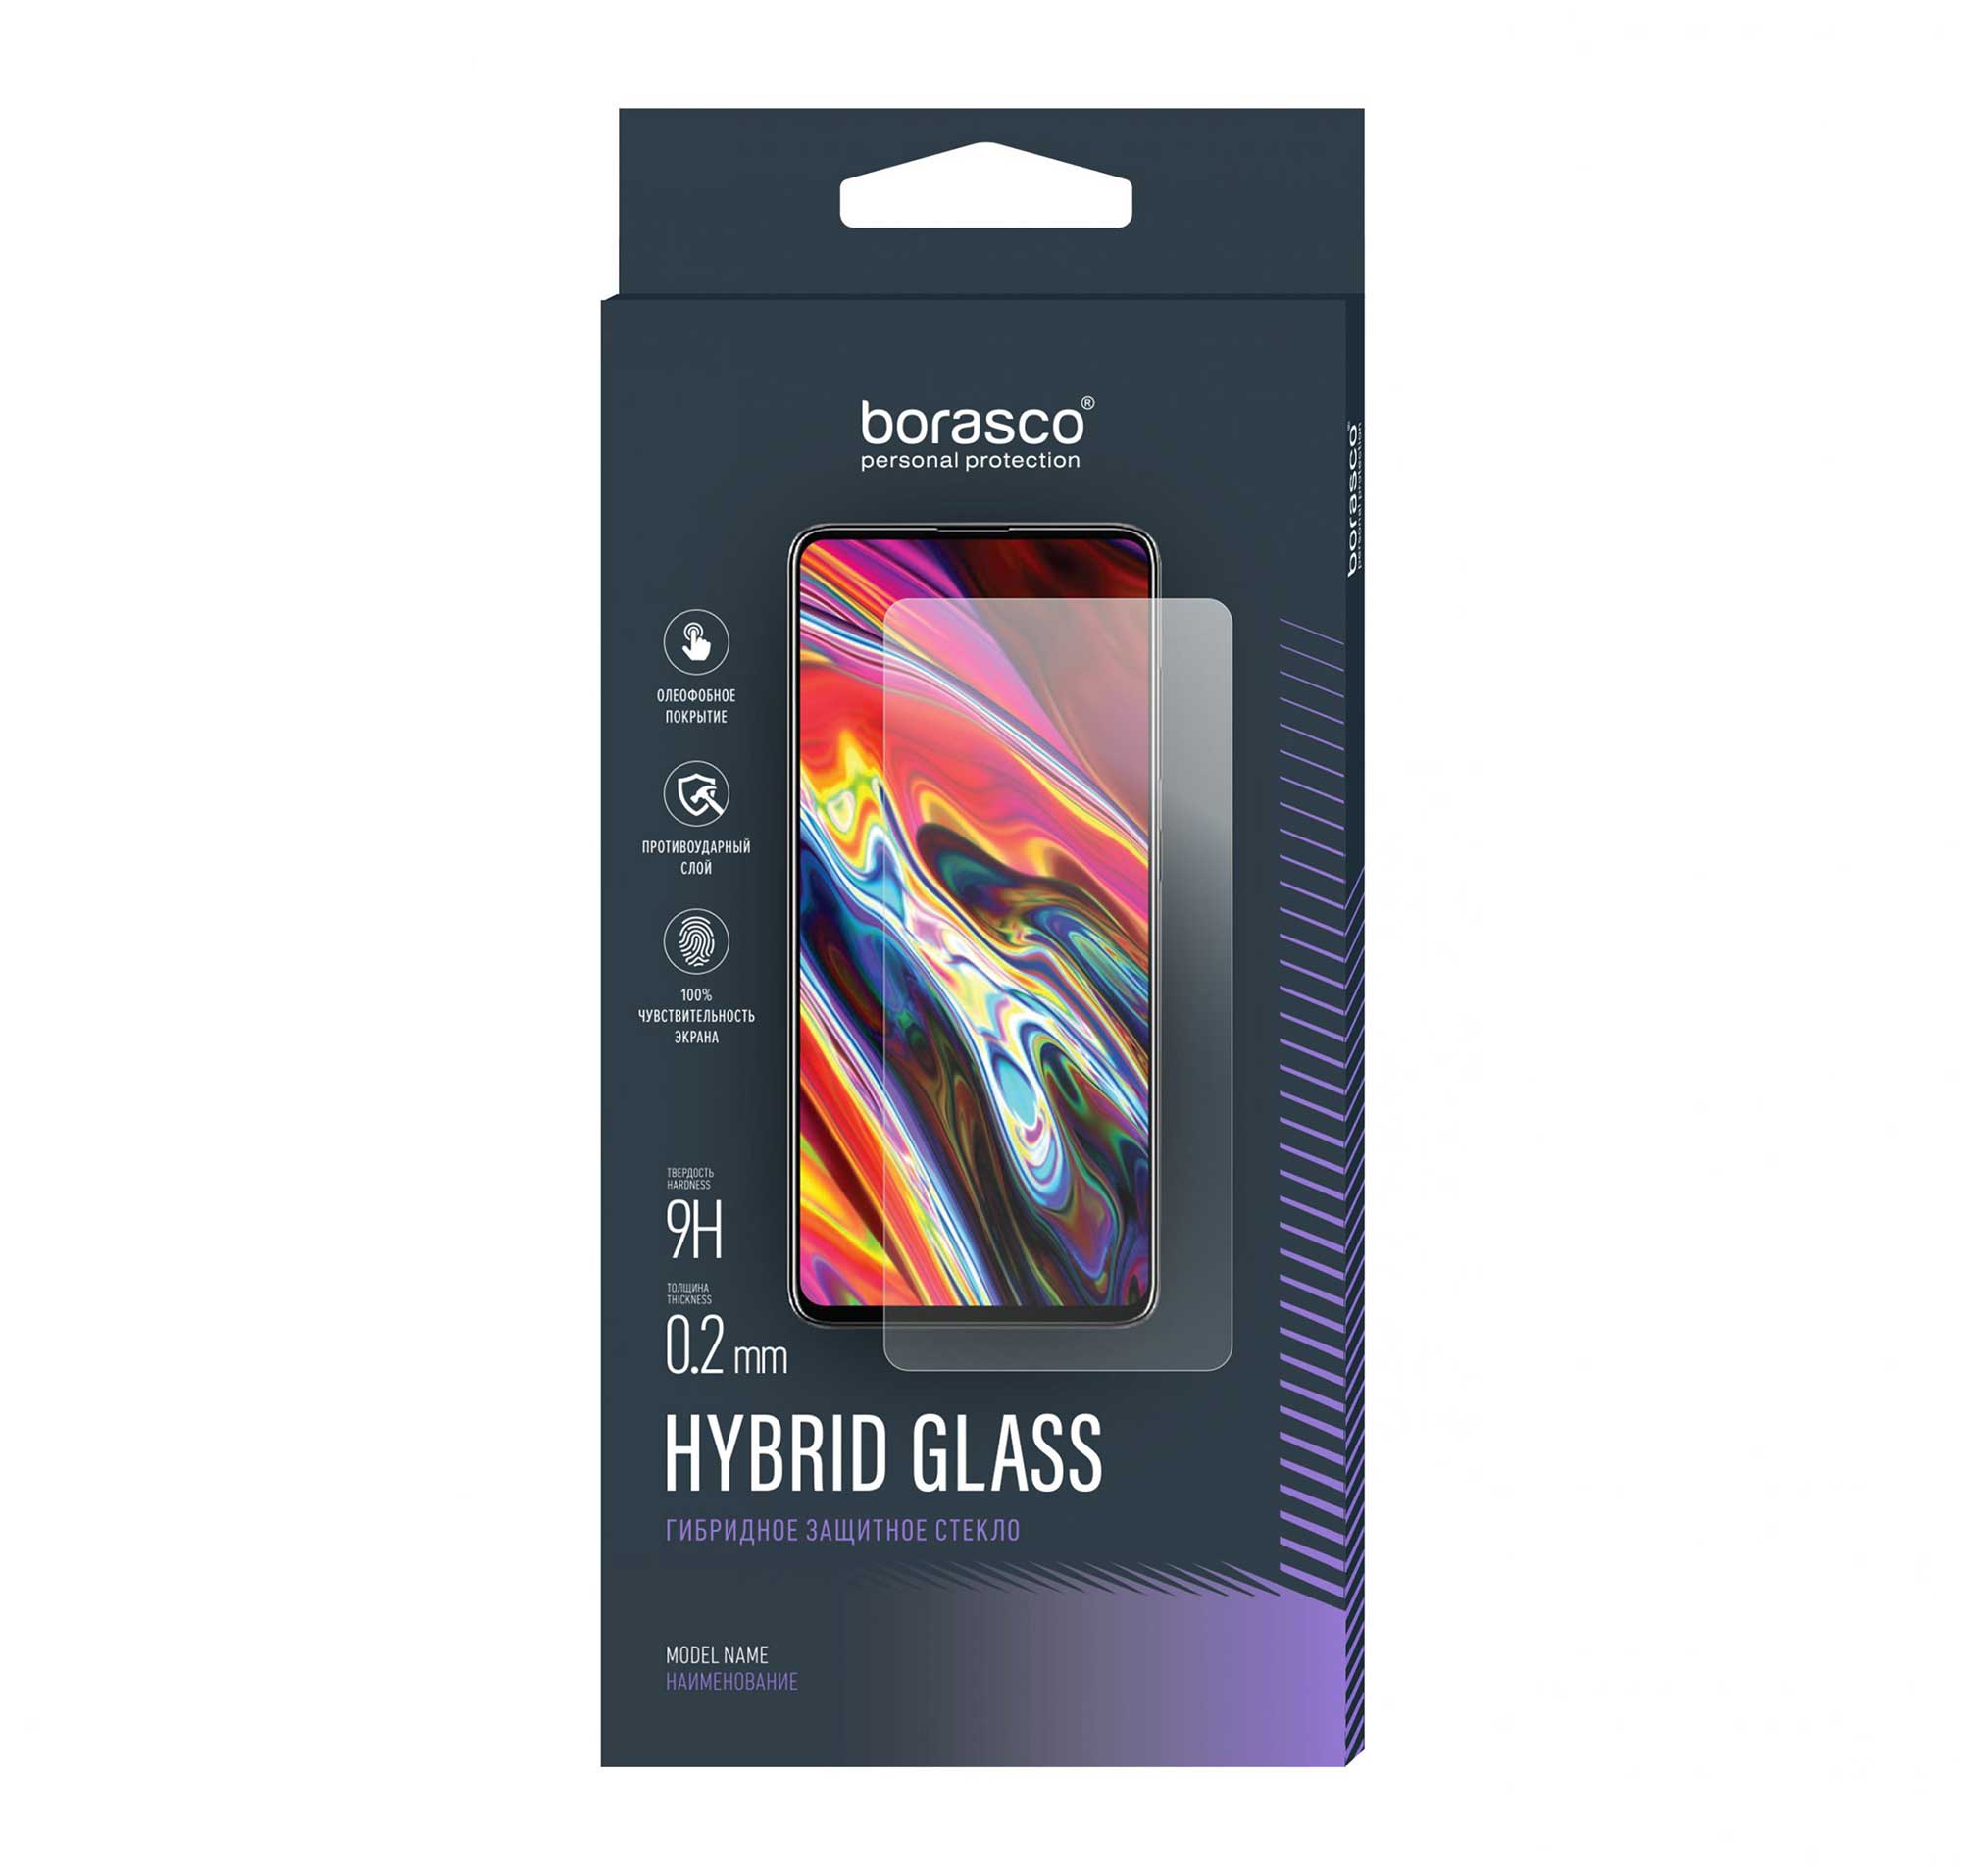 Защитное стекло Hybrid Glass для Poco F2 Pro цена и фото